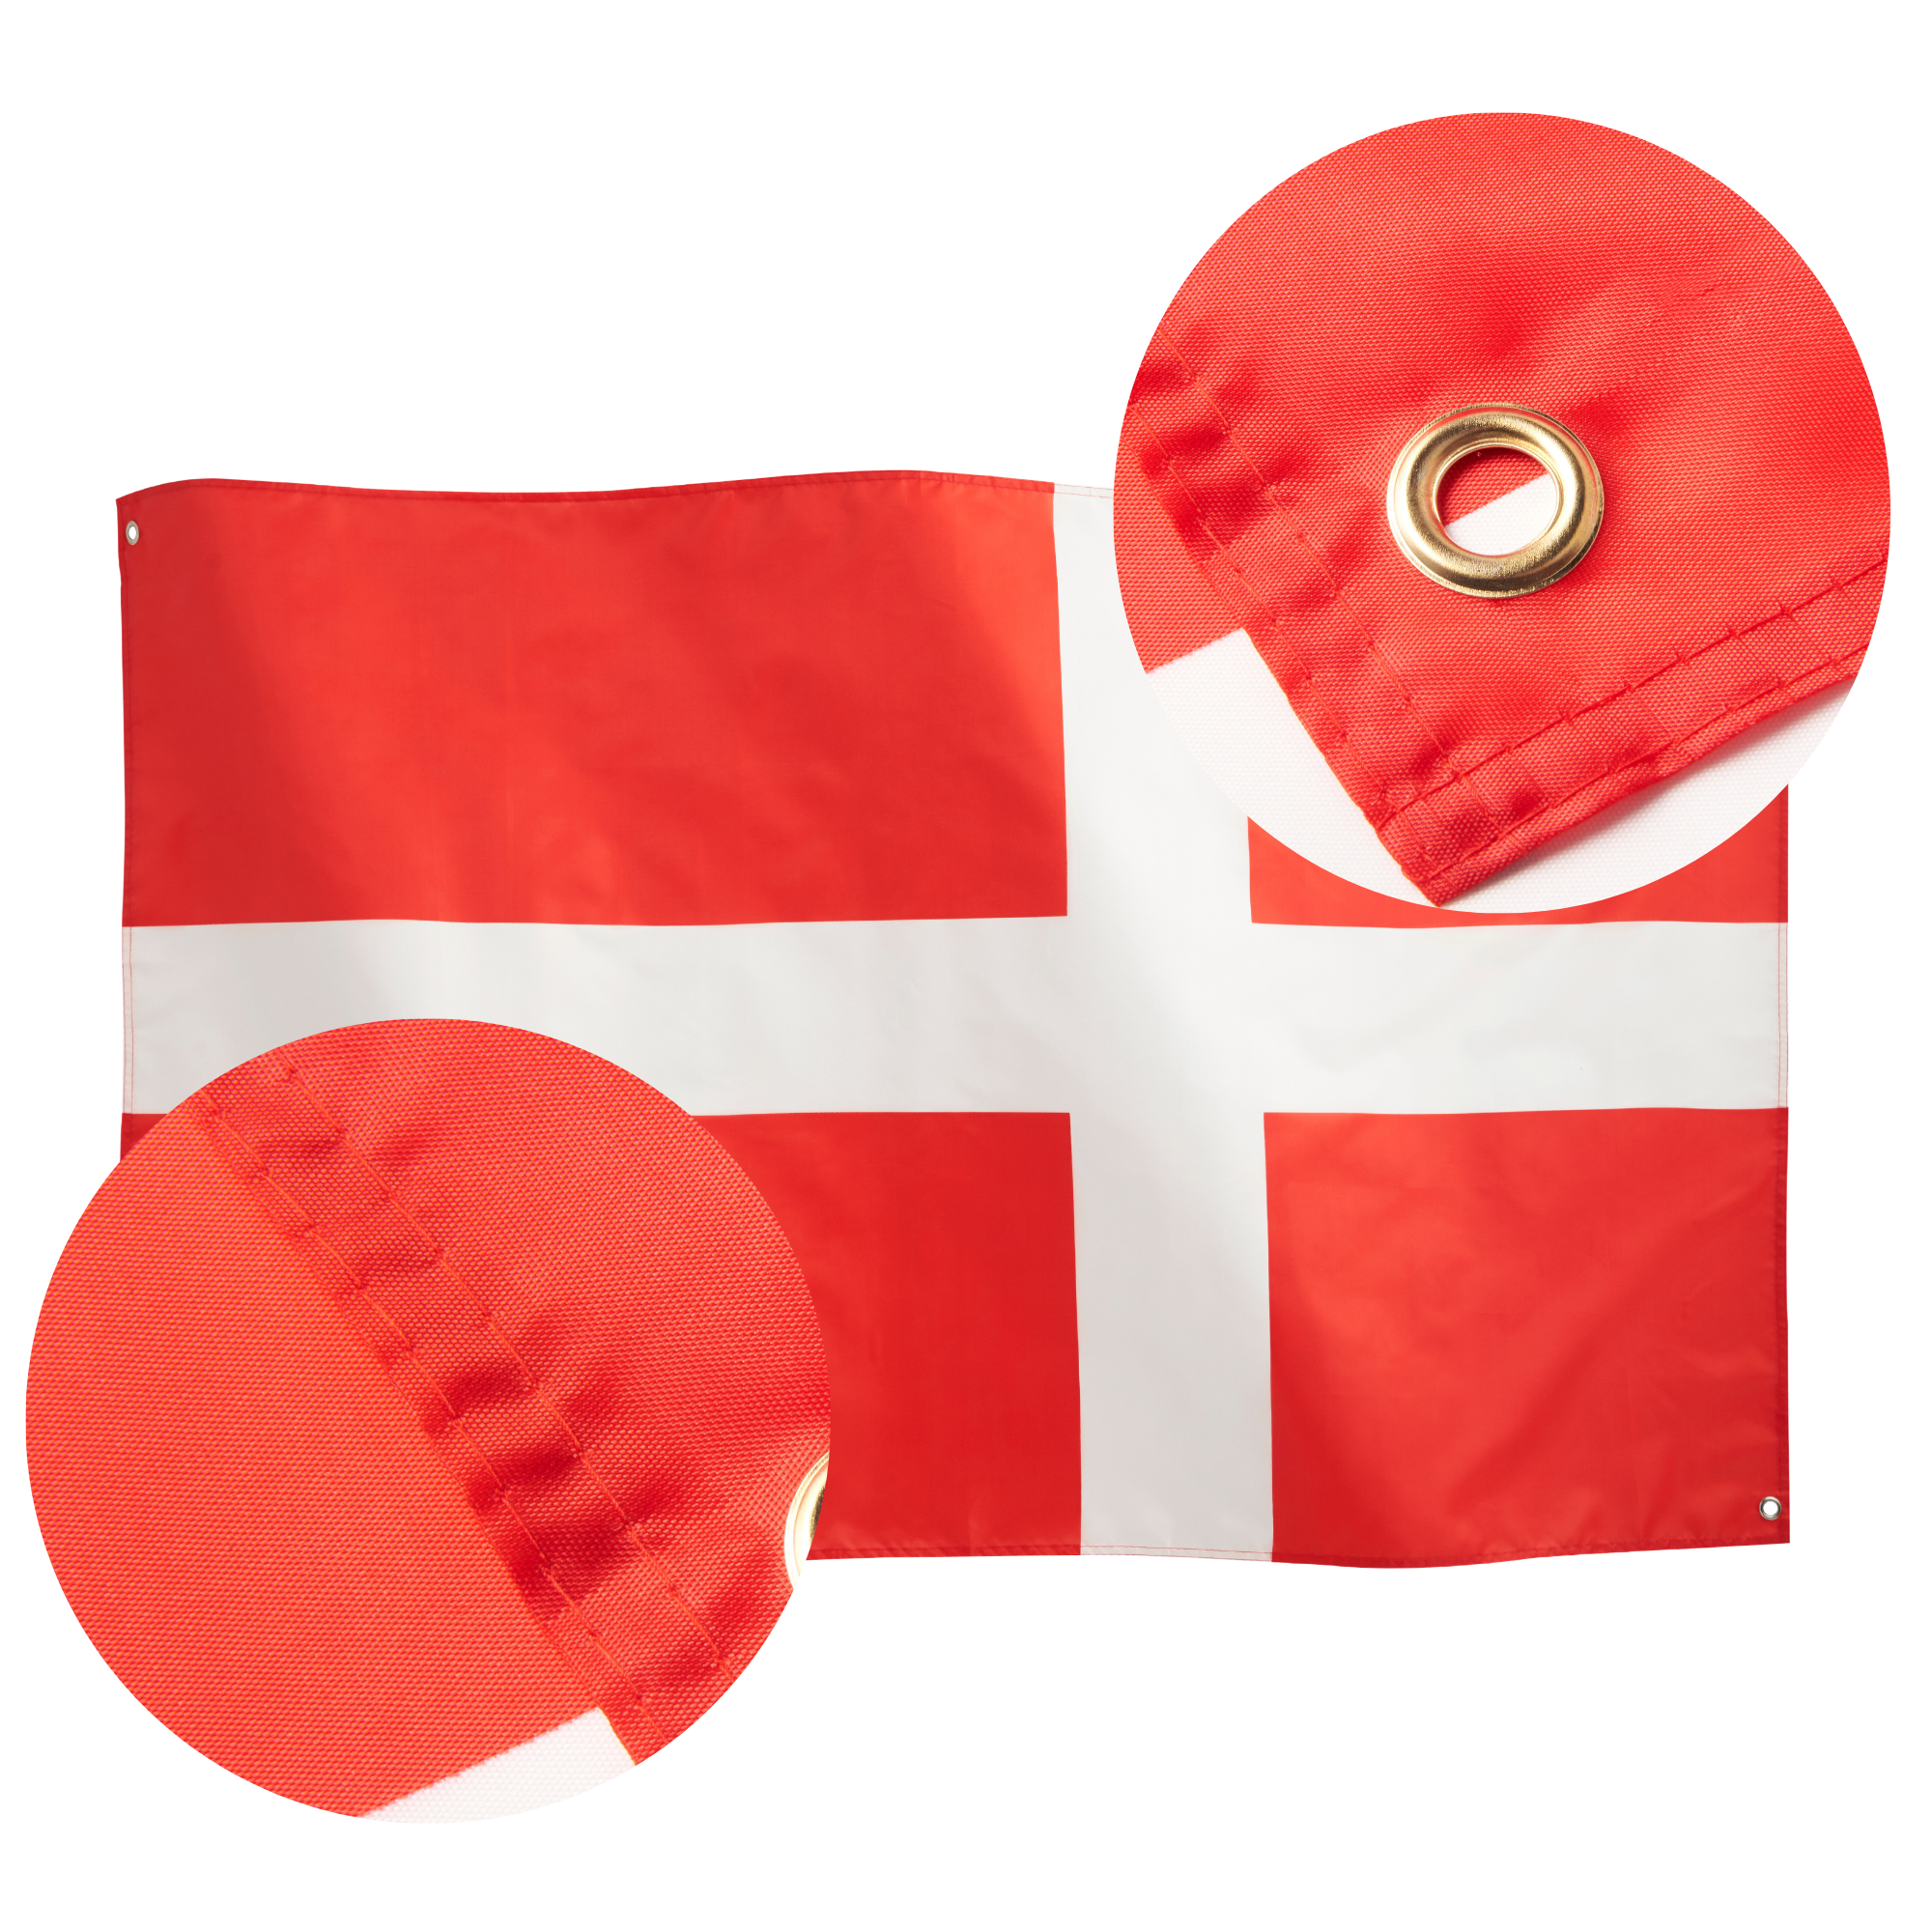 RuneSol Premium Large 5x3ft NATIONAL Flags